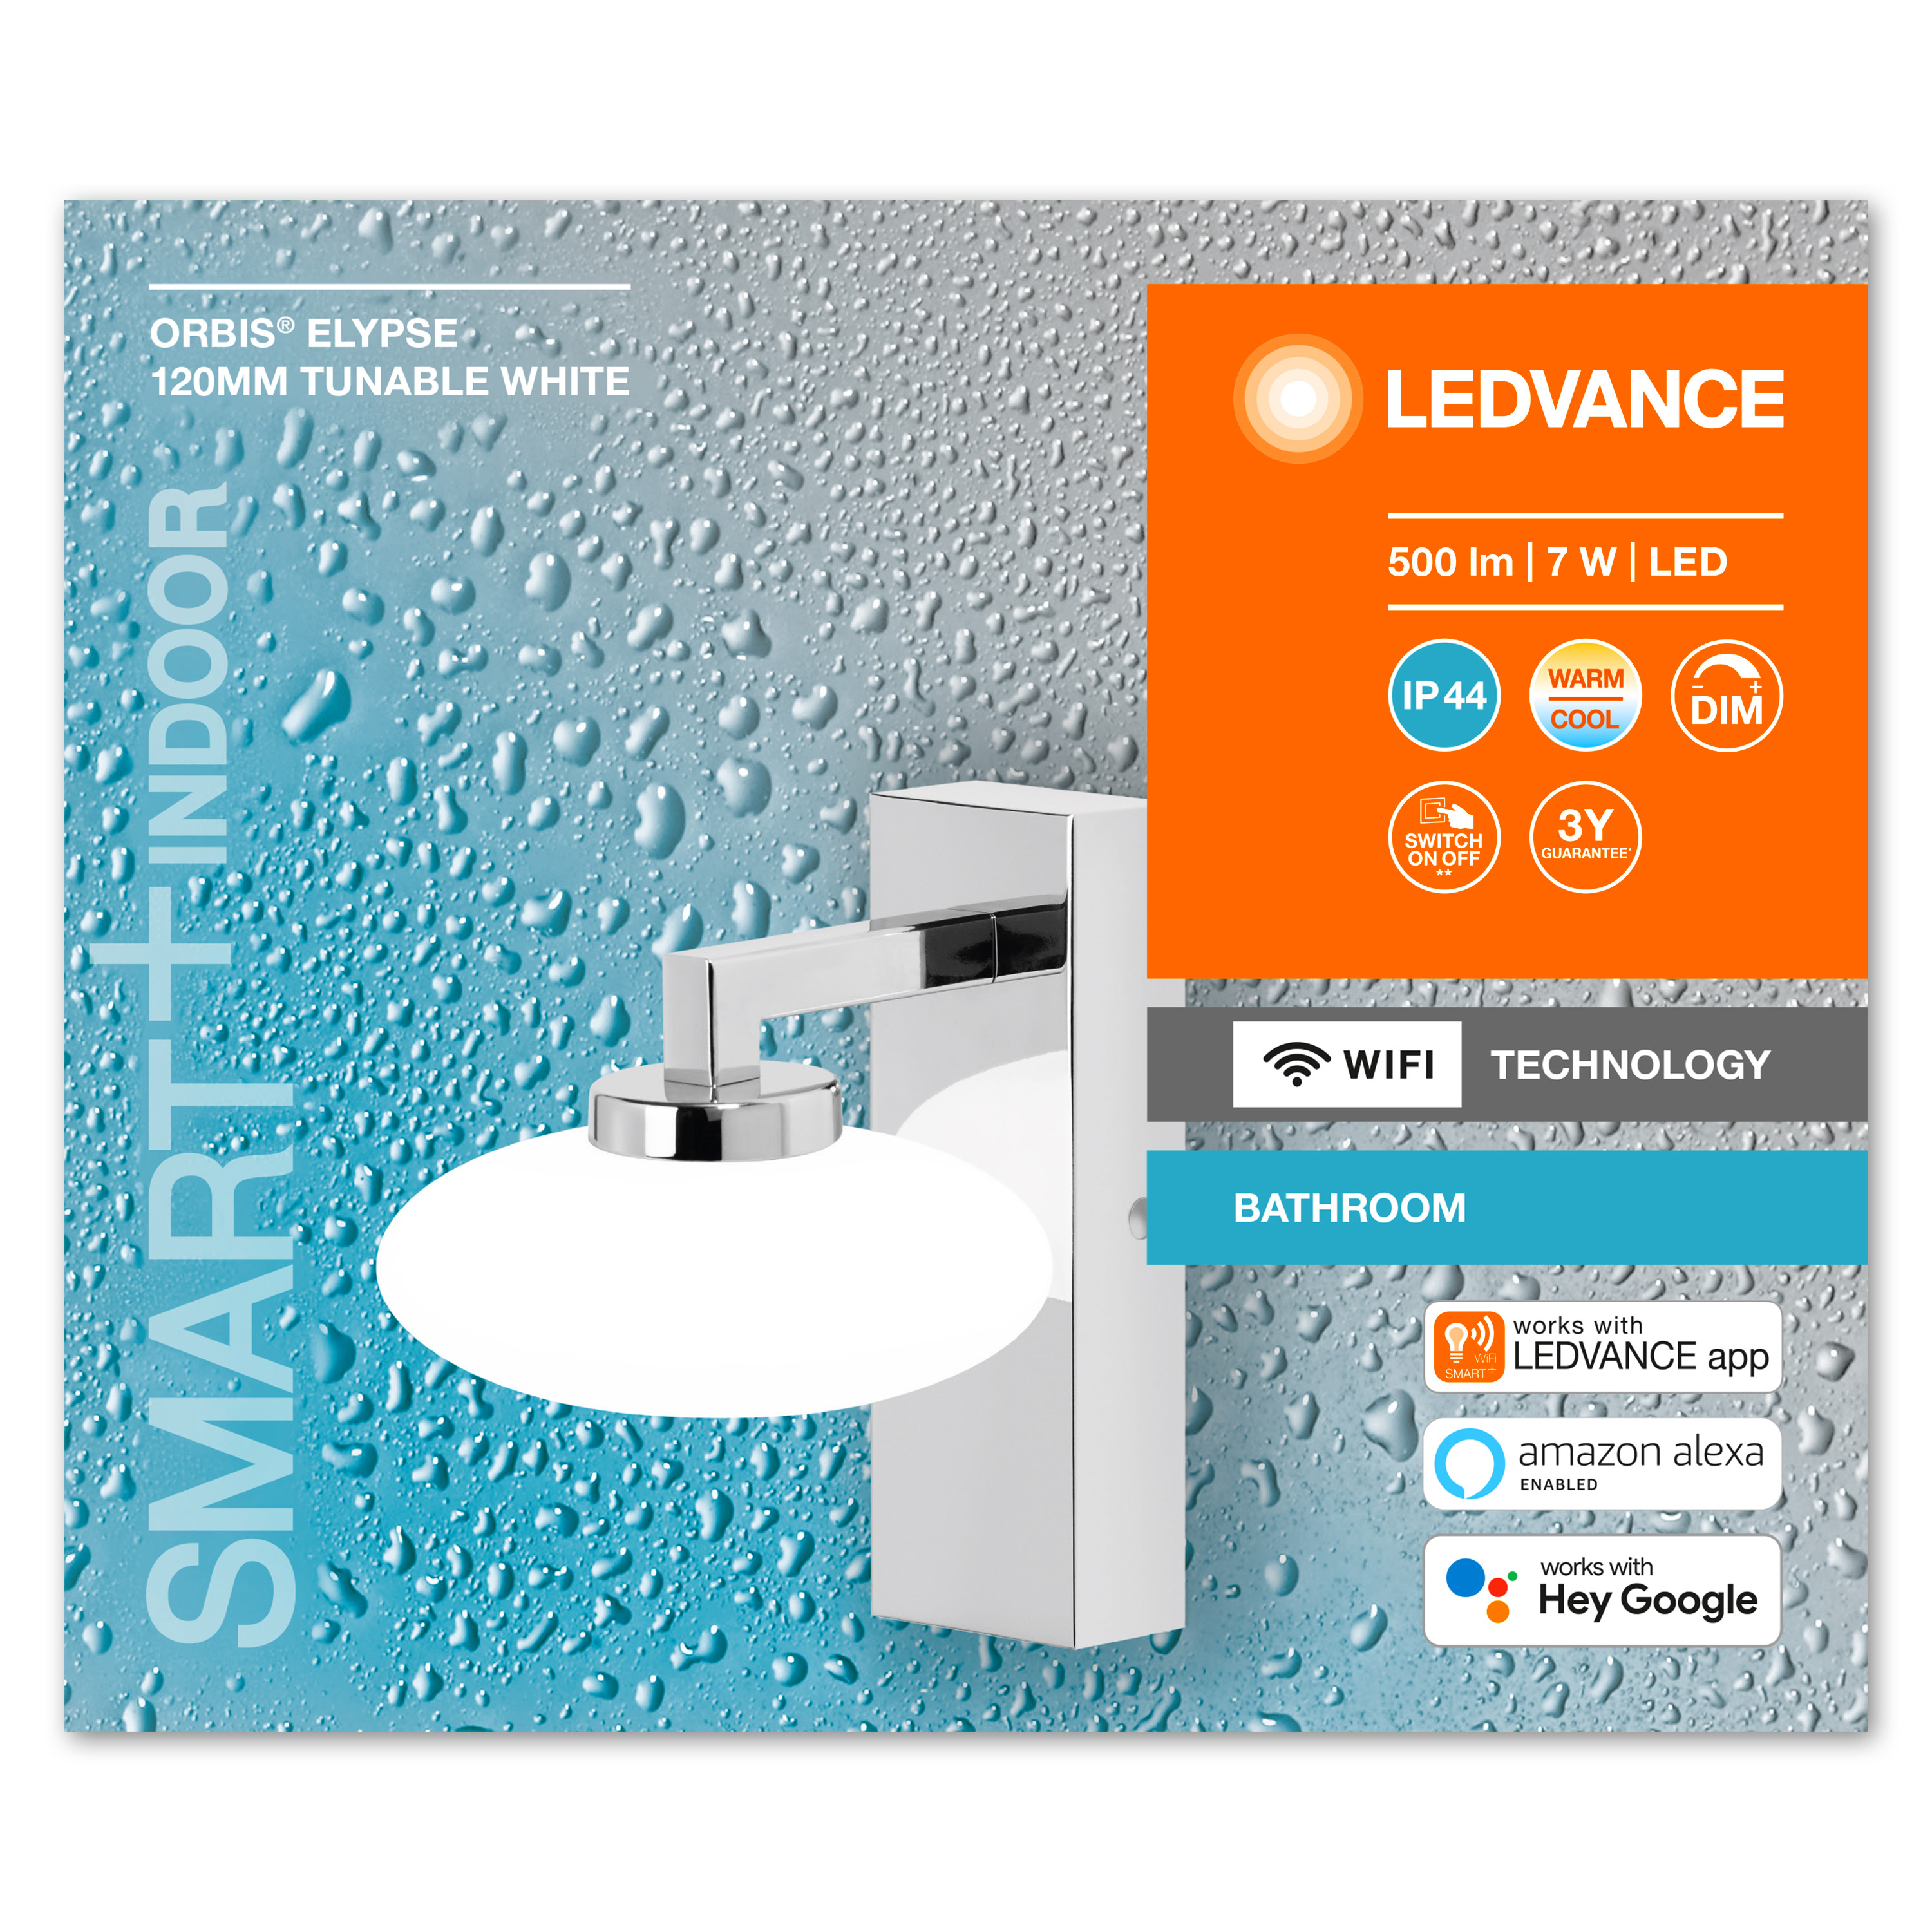 LEDVANCE BATHROOM CEILING AND Lichfarbe WALL DECORATIVE Badezimmerbeleuchtung änderbar WITH TECHNOLOGY WIFI